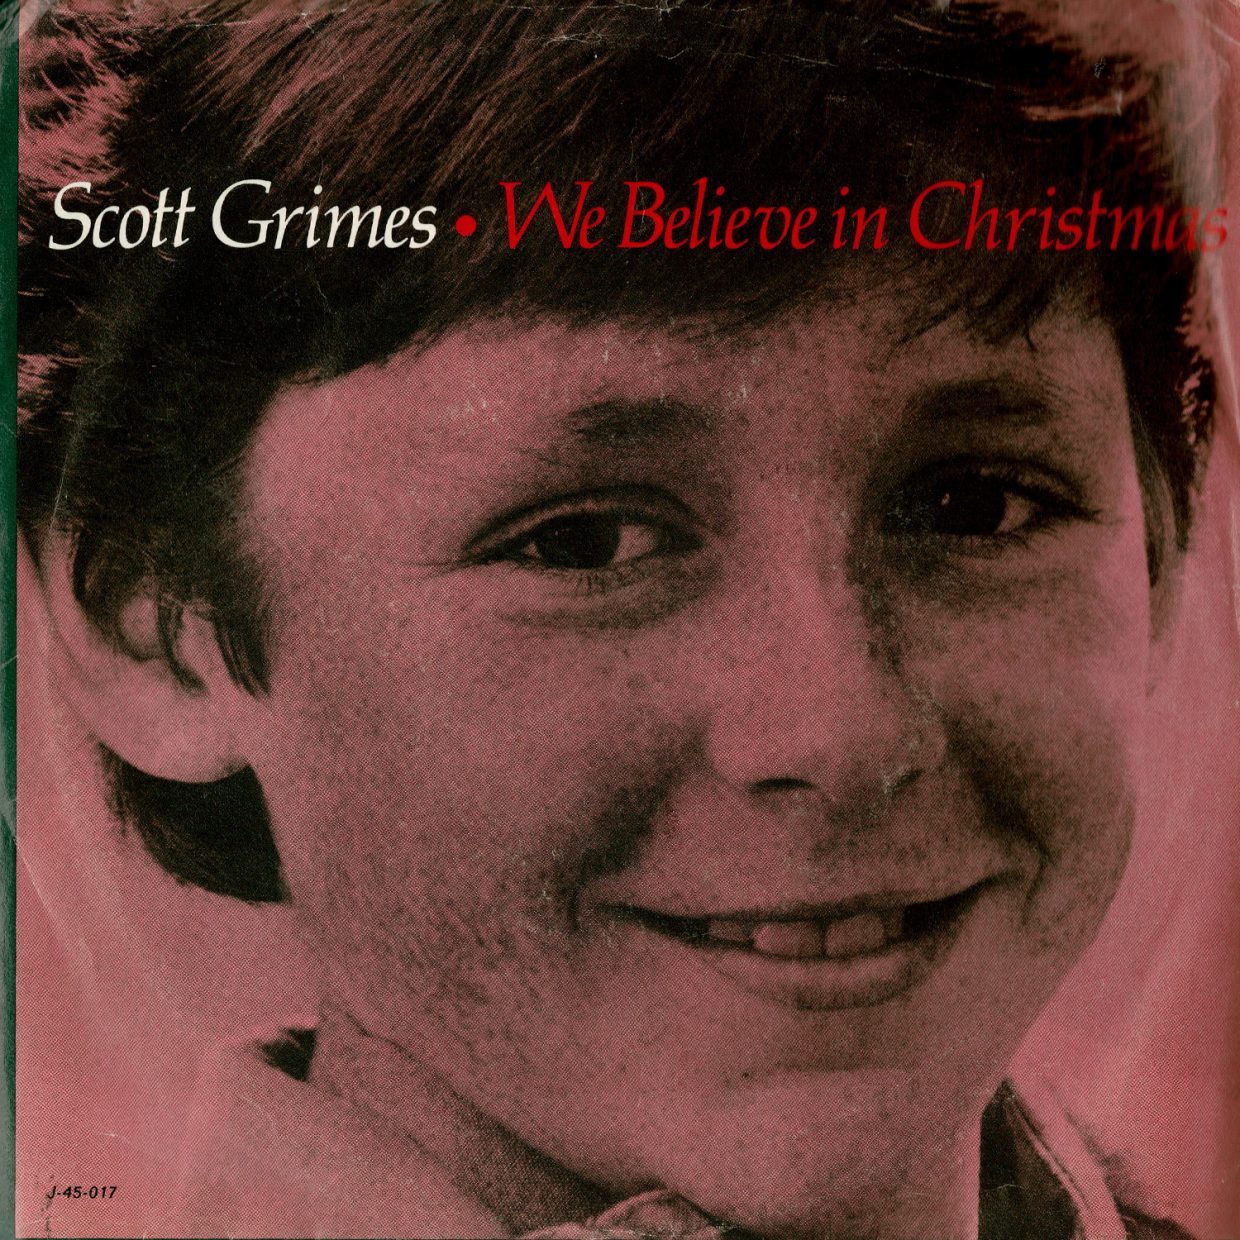 Scott Grimes - We Believe in Christmas (Single)